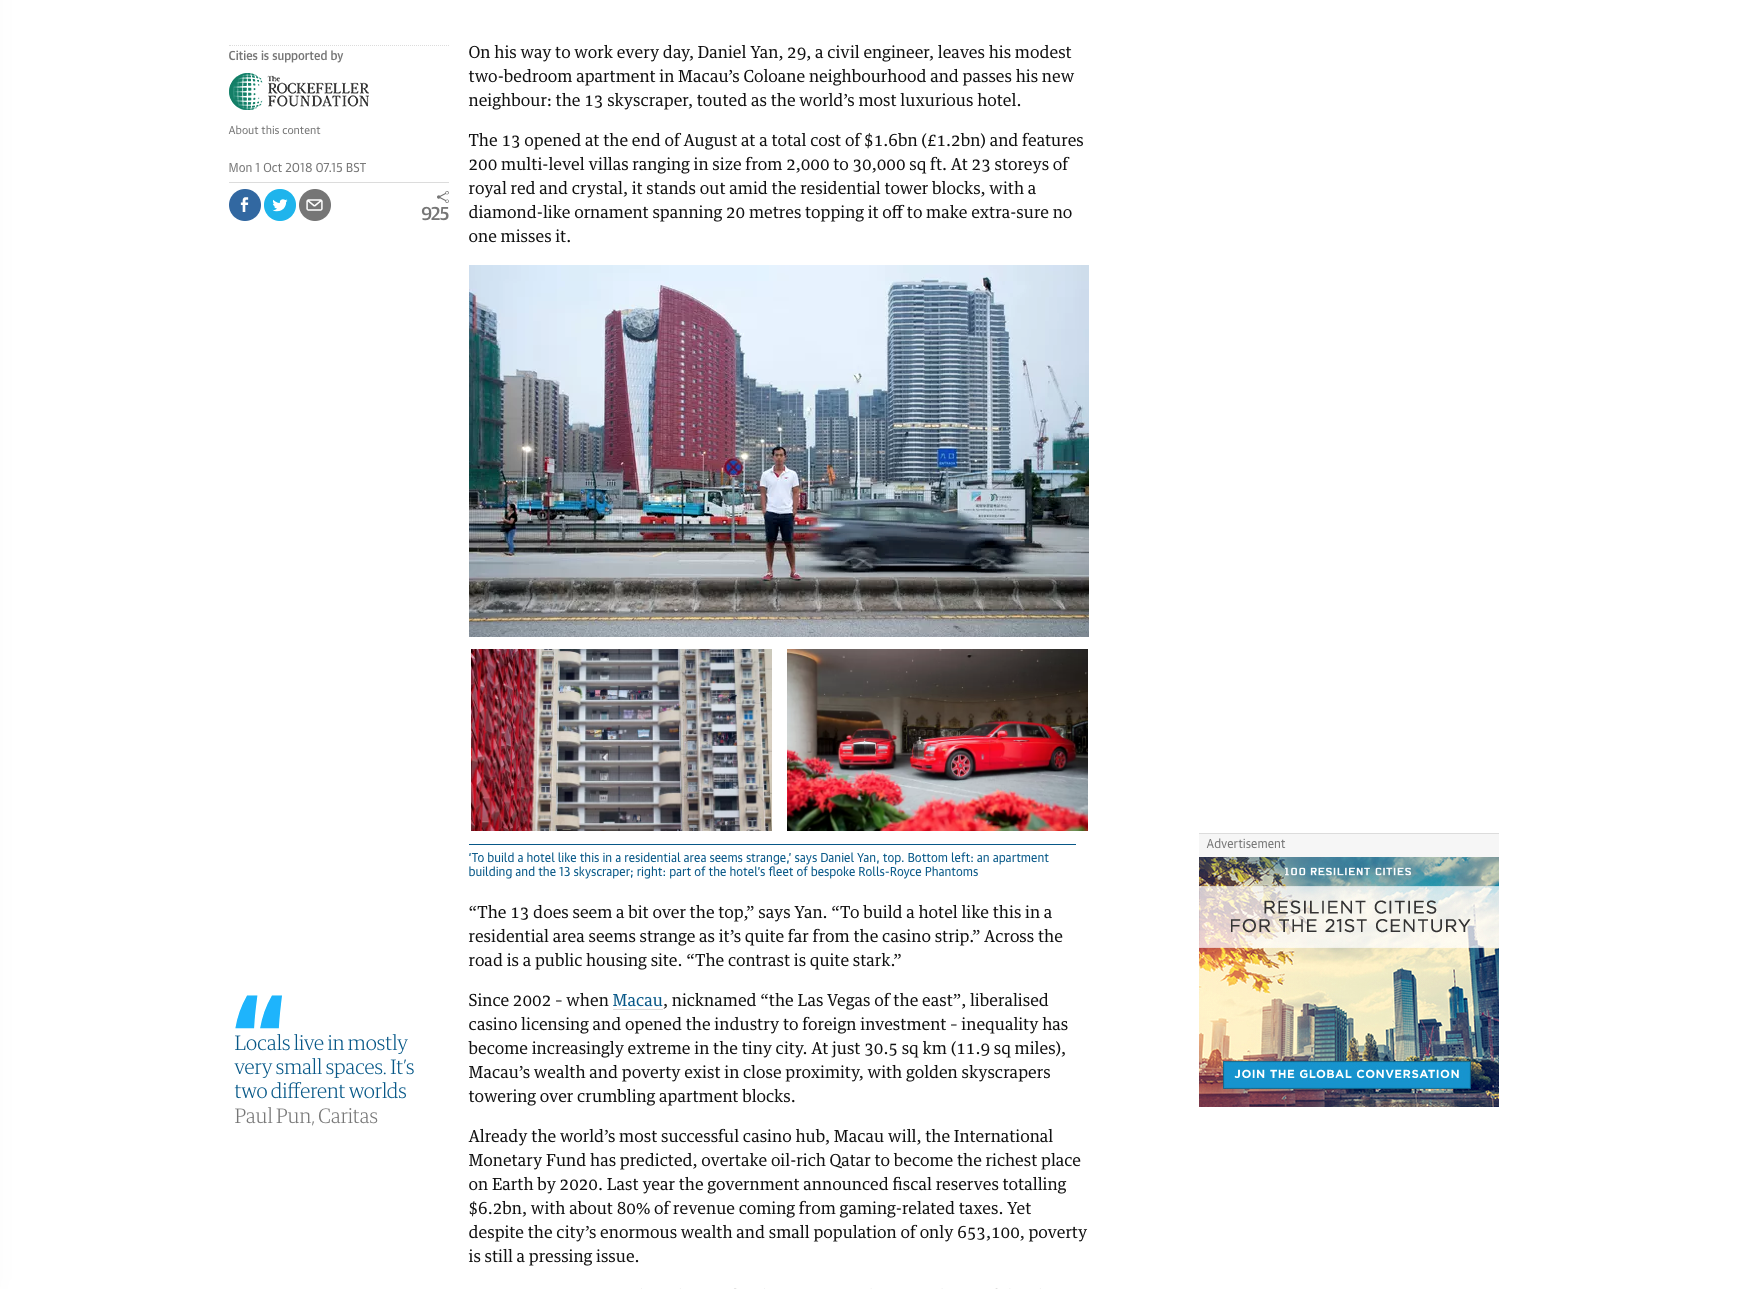 Multibillion-dollar Macau: a city of glitz and grit "“ photo essay